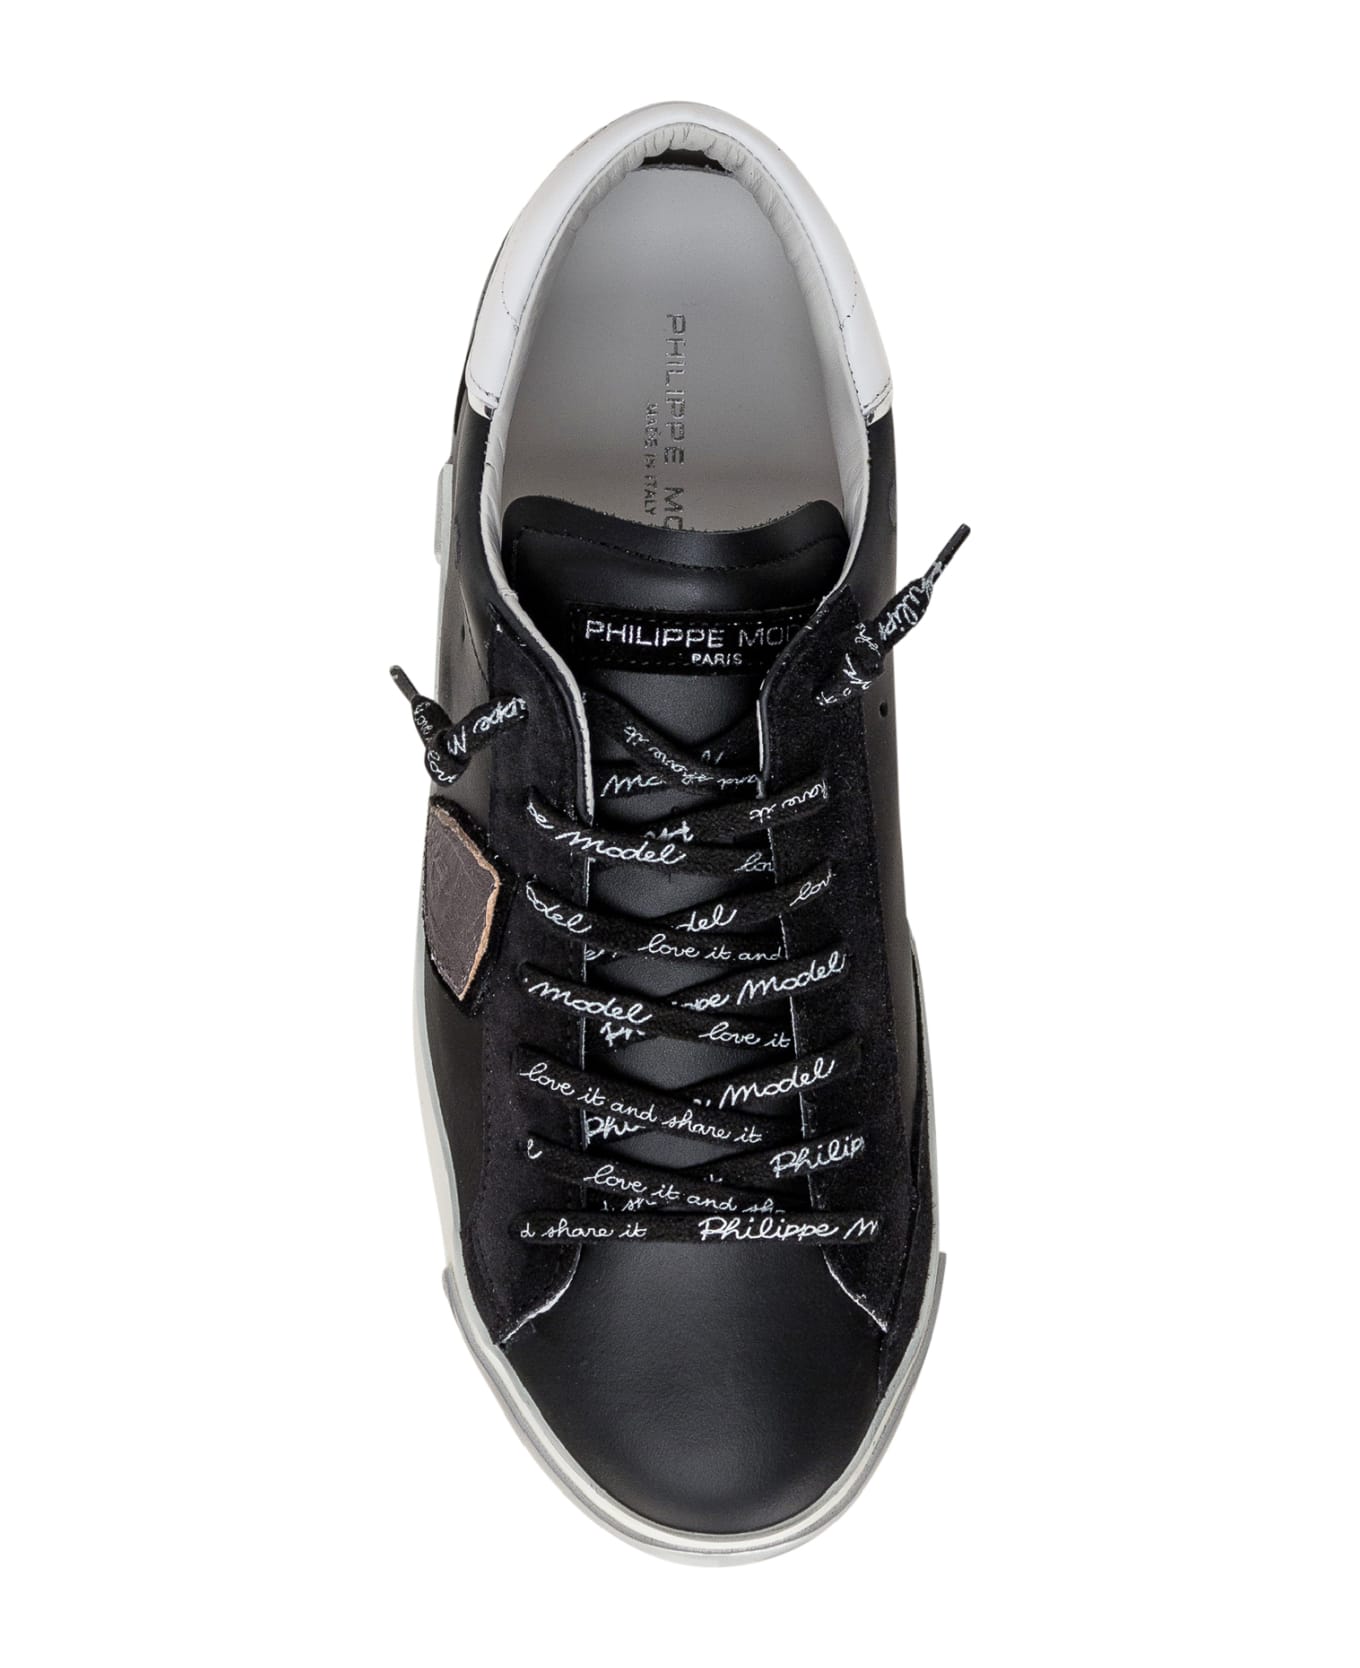 Philippe Model Prsx Sneaker - Nero/argento スニーカー